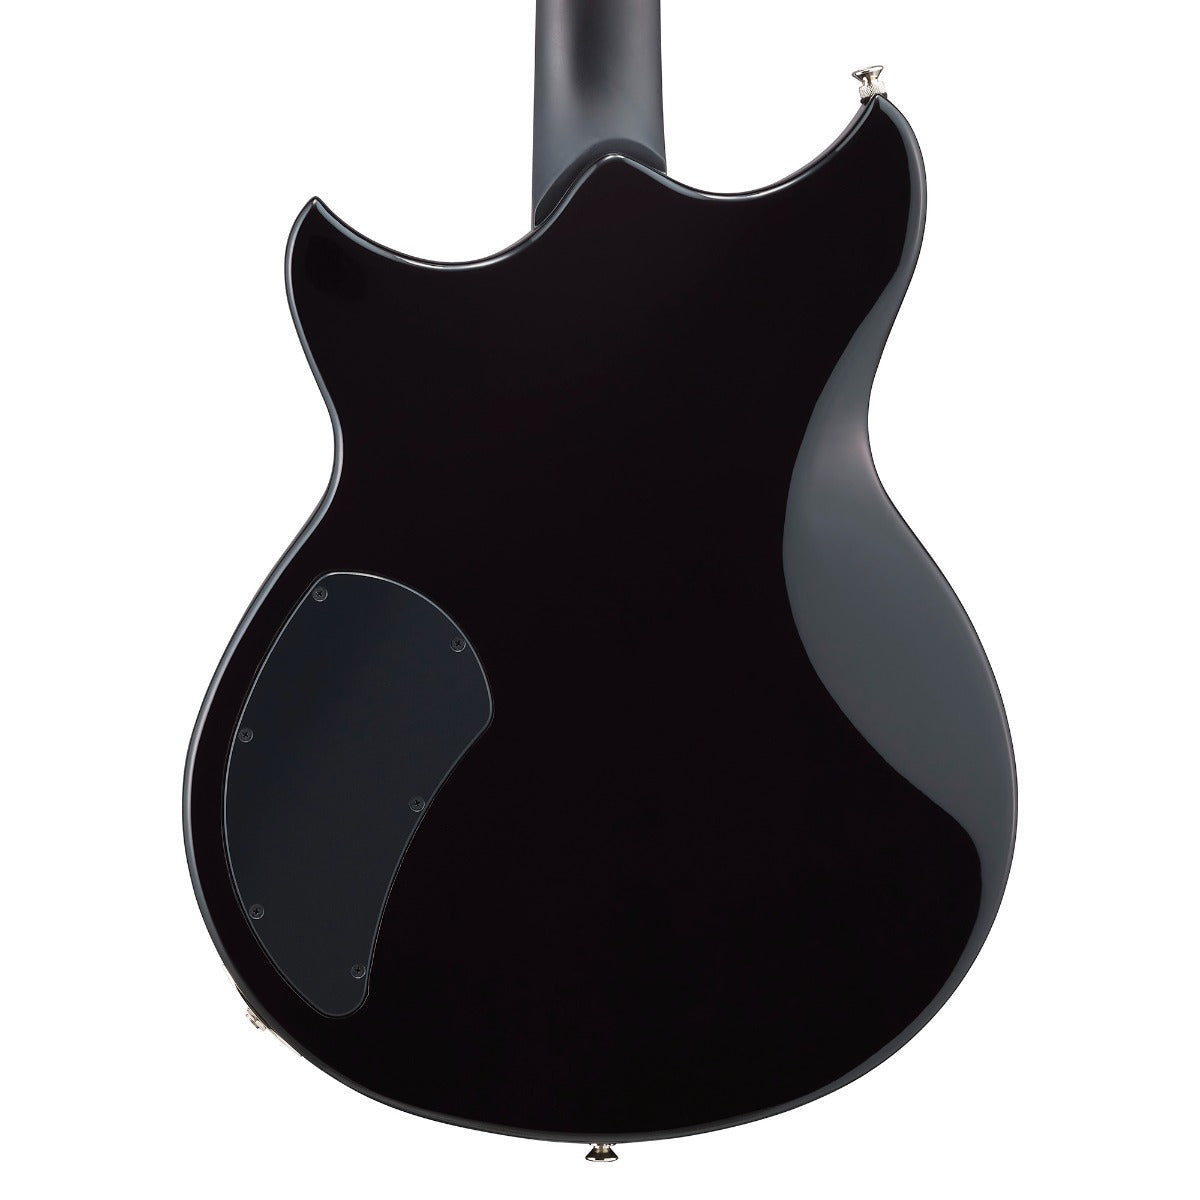 Yamaha RSE20 Revstar Element Electric Guitar - Black COMPLETE GUITAR BUNDLE